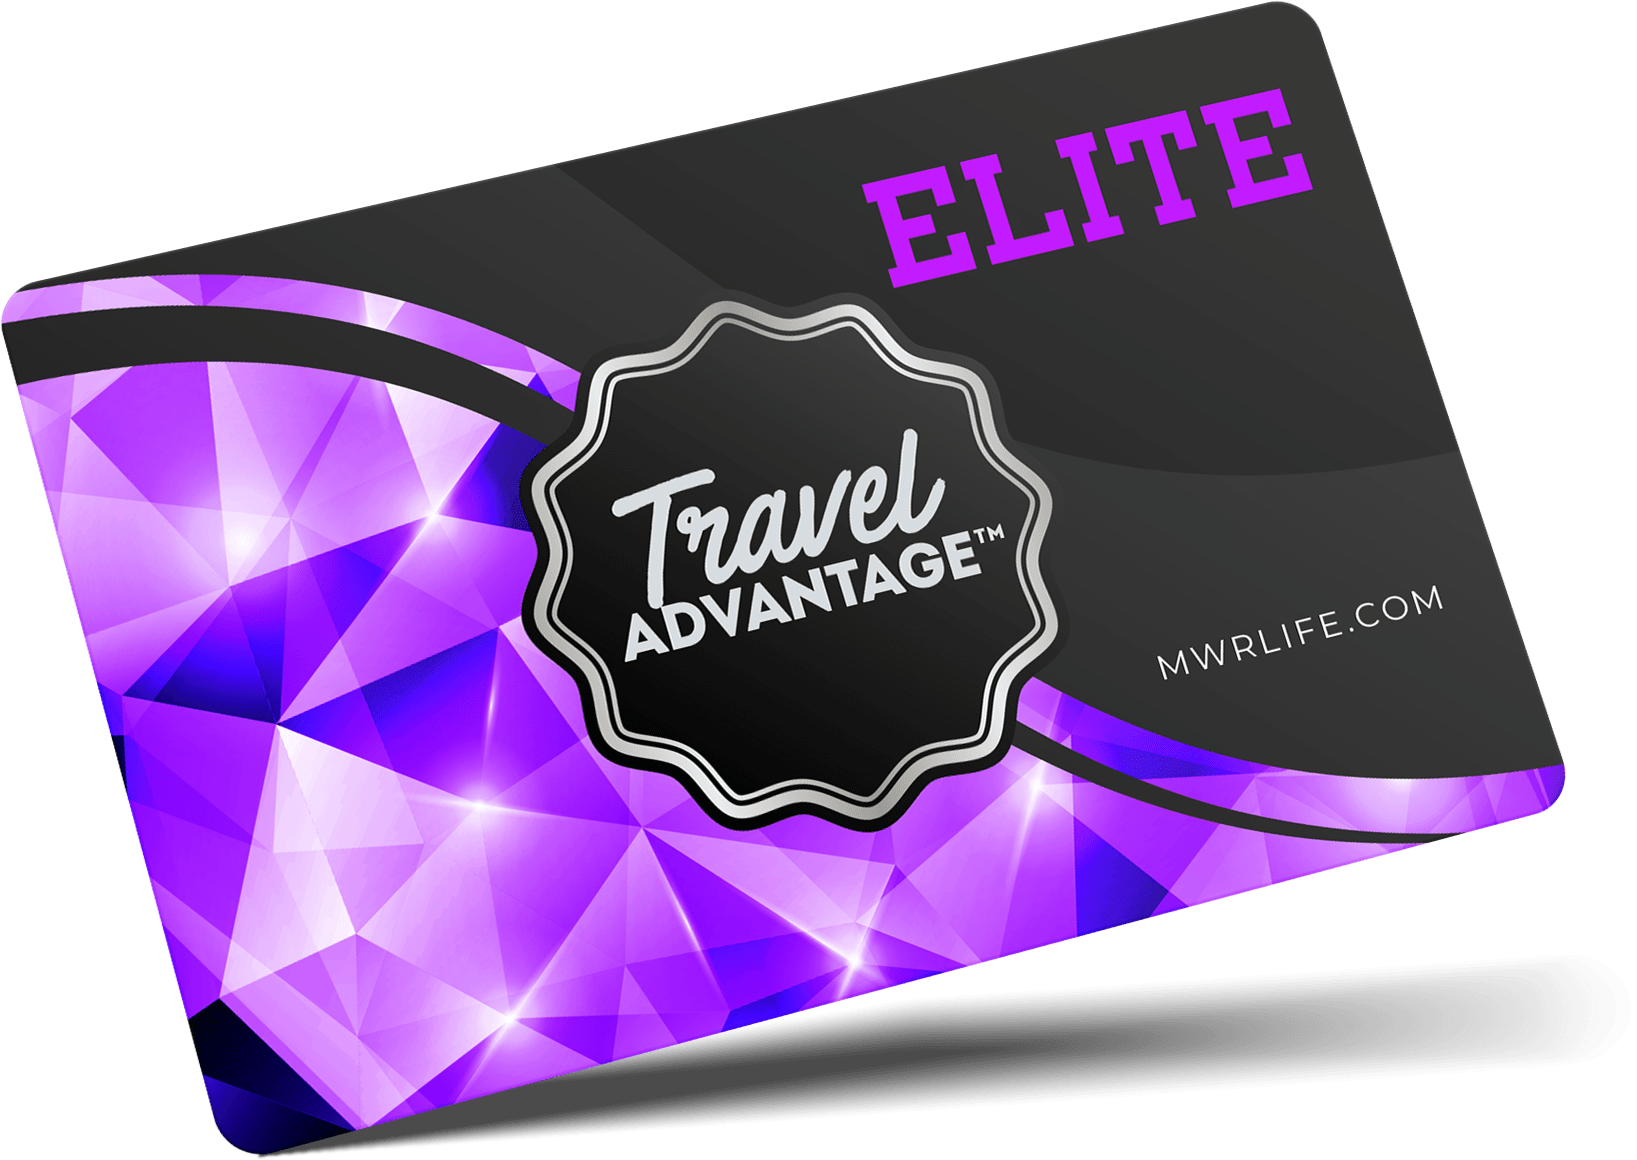 Elite travel. Card PNG.